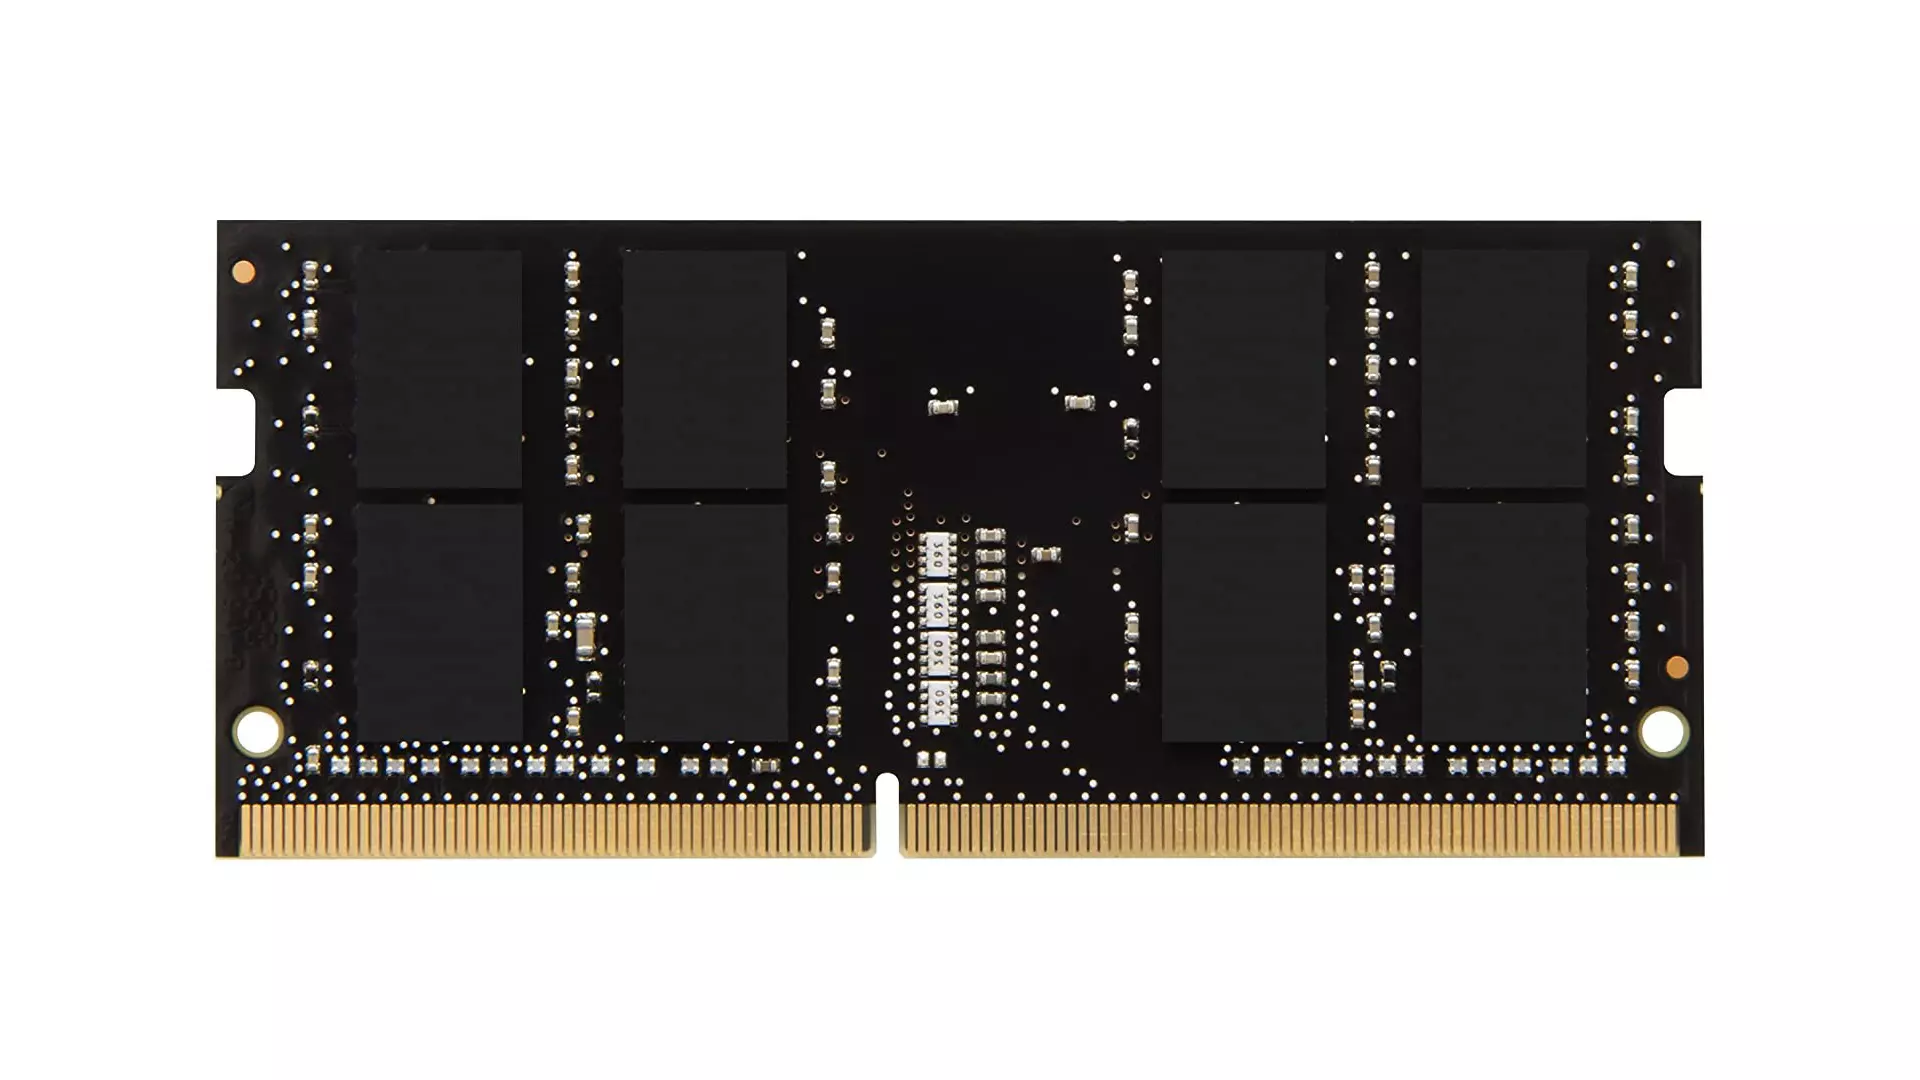 Nagy kapacitású So-DIMM memóriamodulok a HyperX műhelyéből